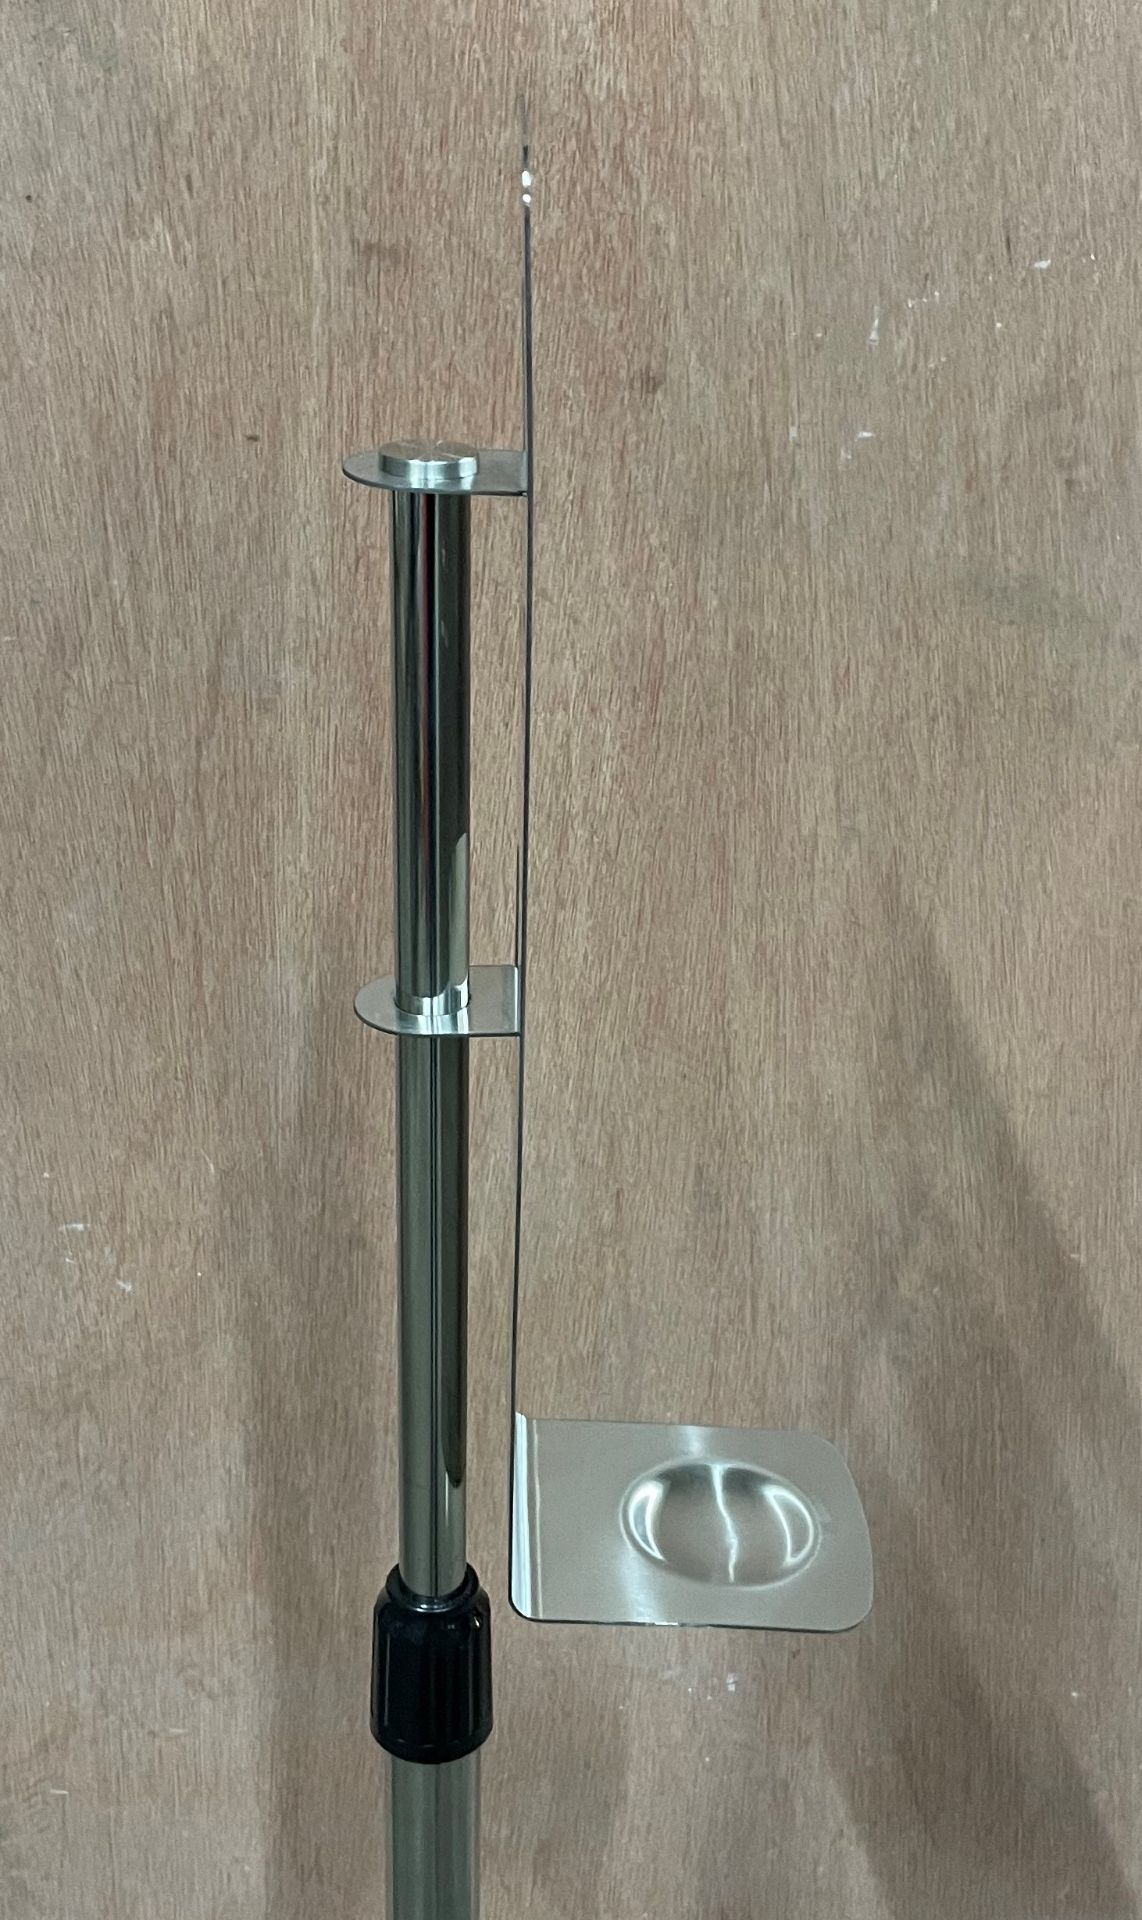 2x HCI Metal Sanitizer Stands | HCI Liquid Bottle Styled Soap Dispensers |HCI 2/4 Metal Bases - Image 6 of 17